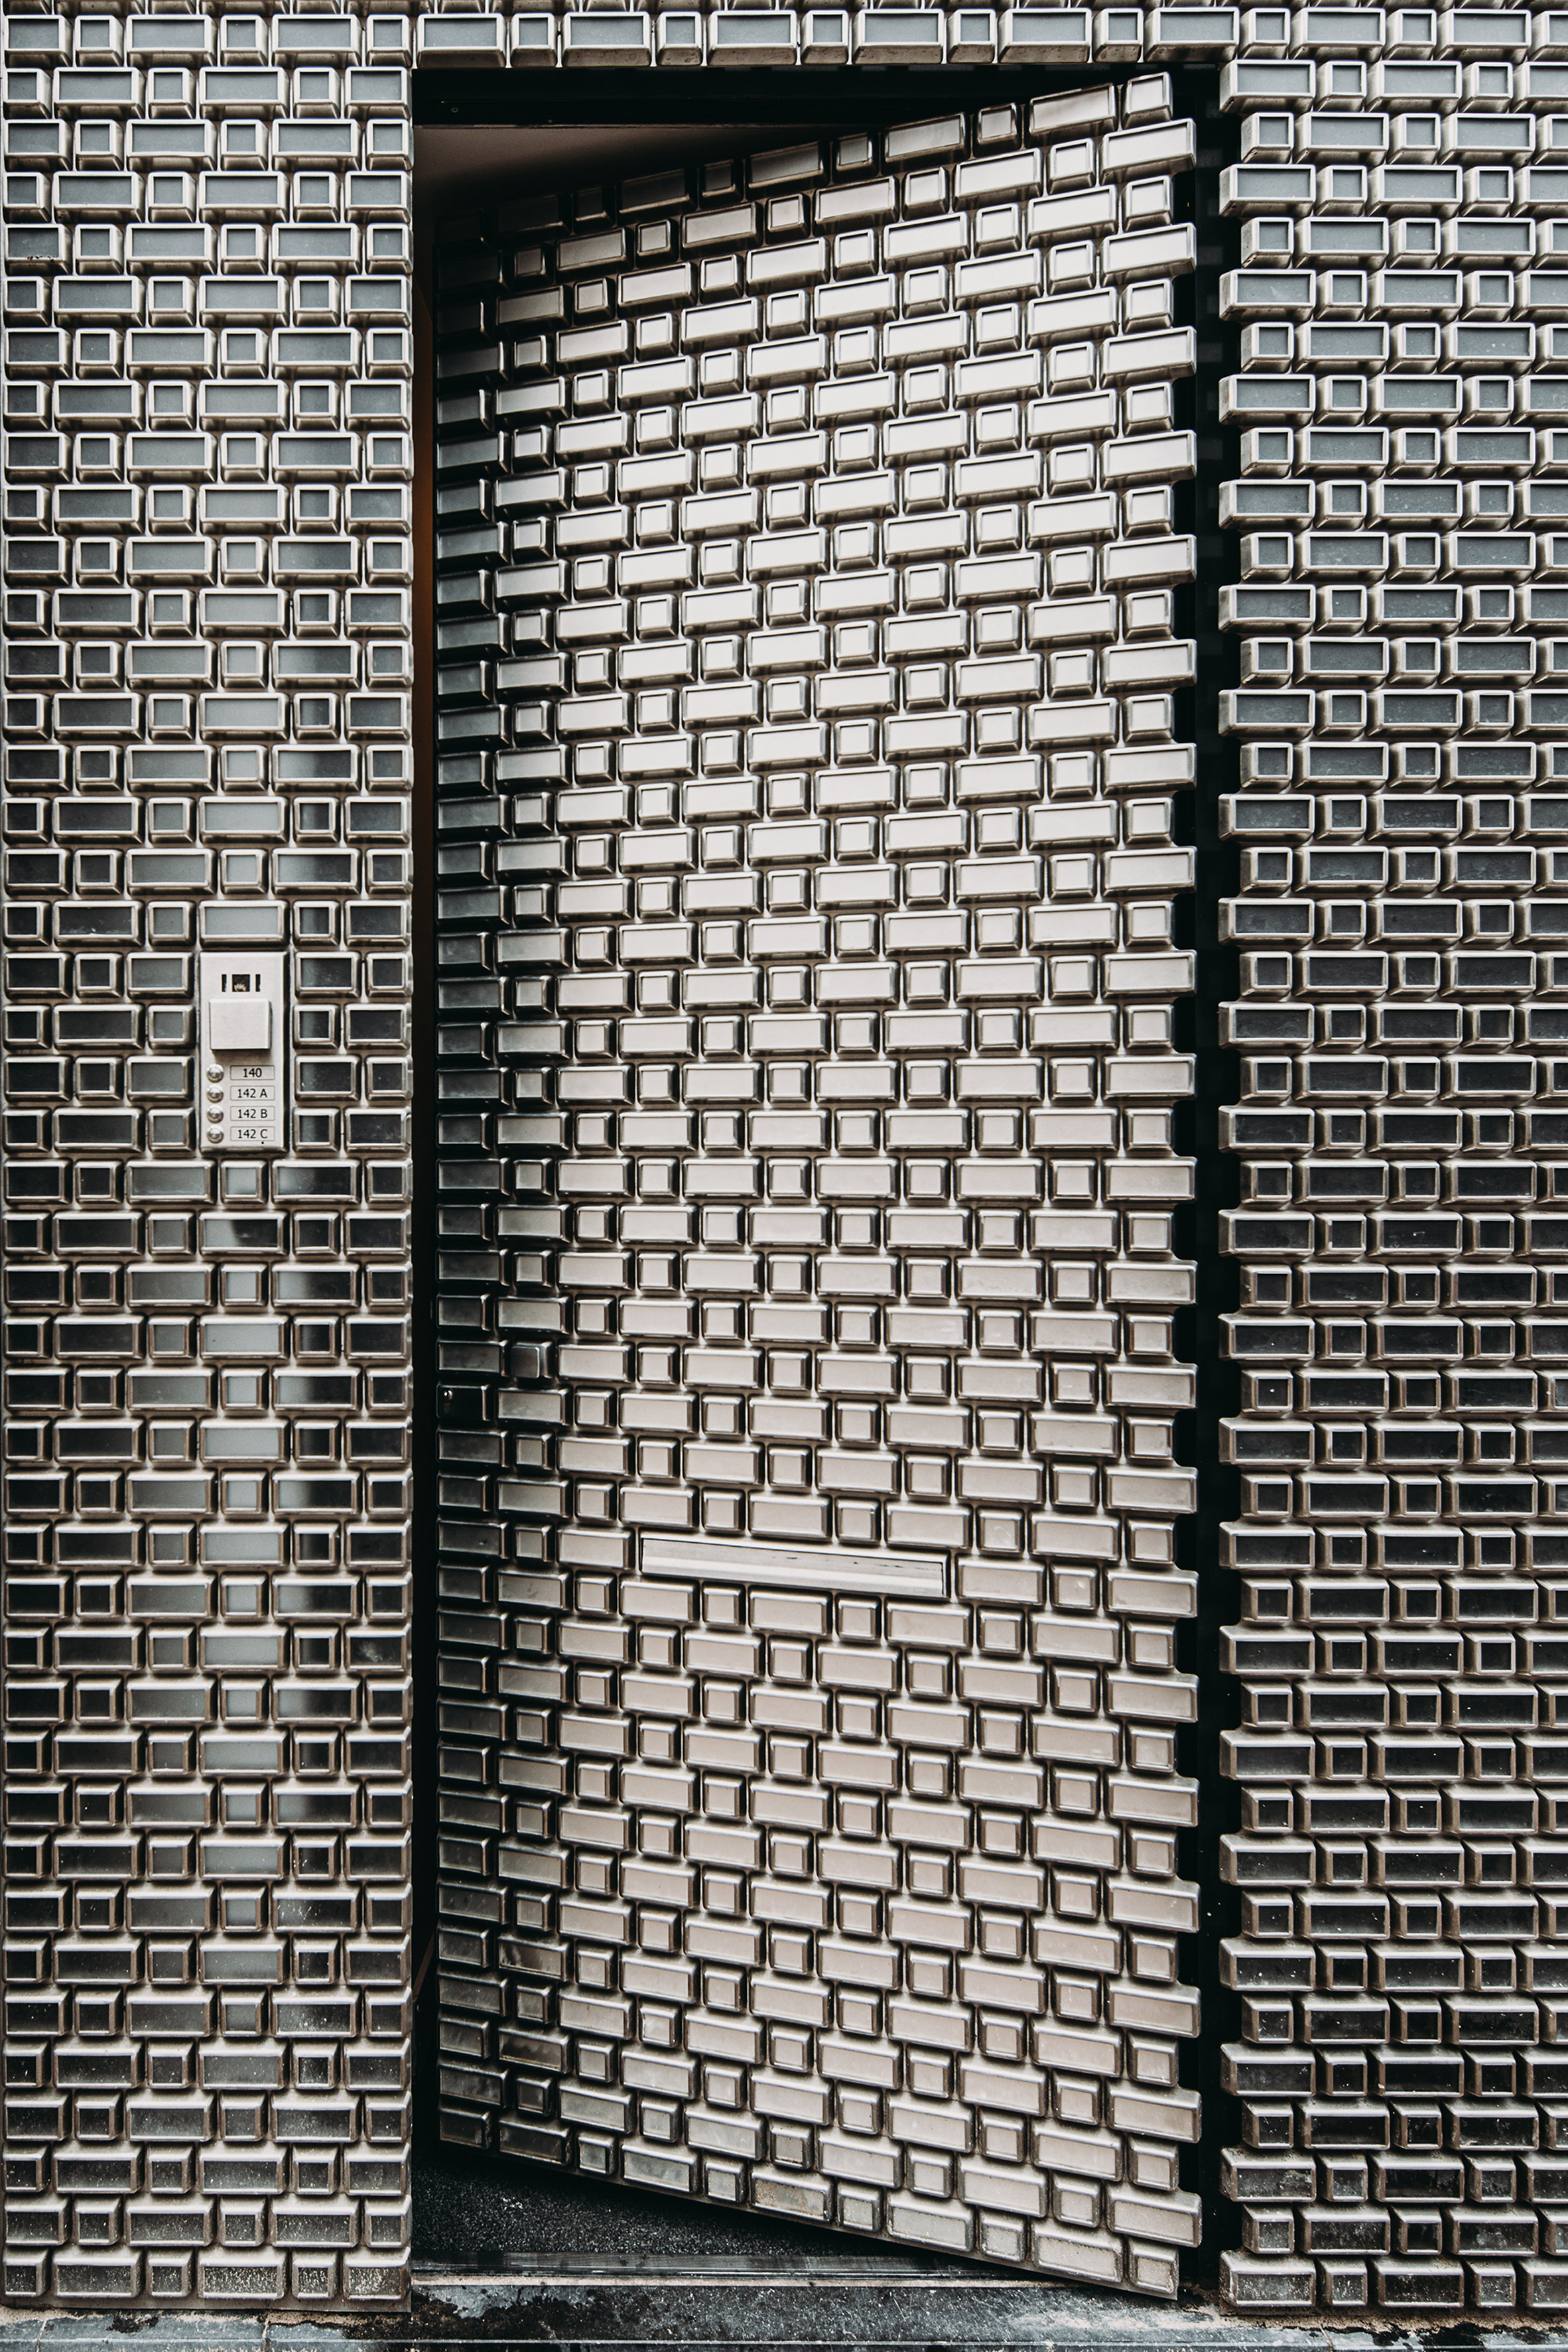 Louis Vuitton store on PC Hooftstraat called Brick Pixelation by UNStudio